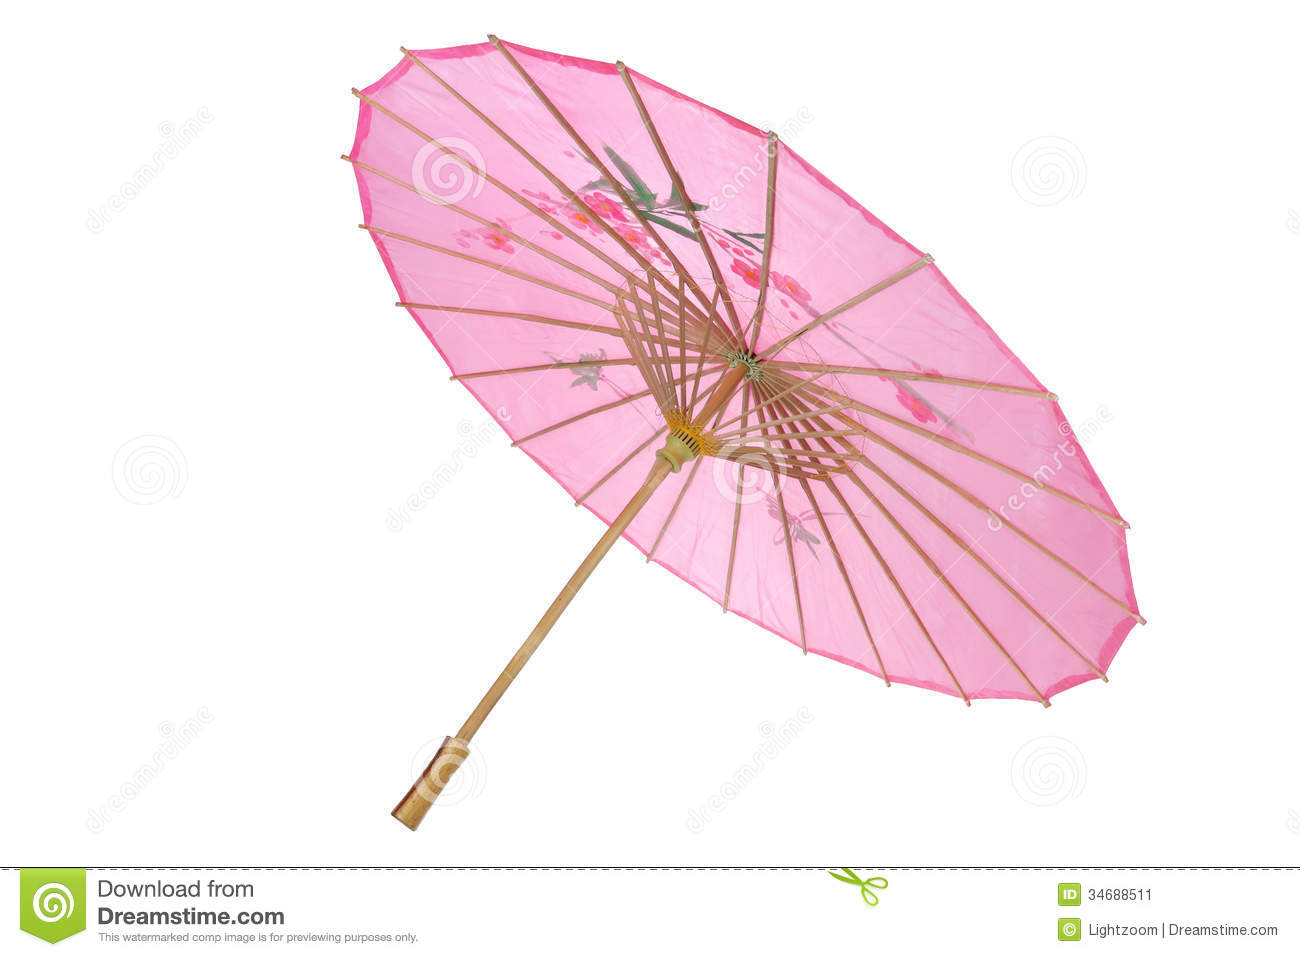 Paper Umbrella Stock Image   Image  34688511